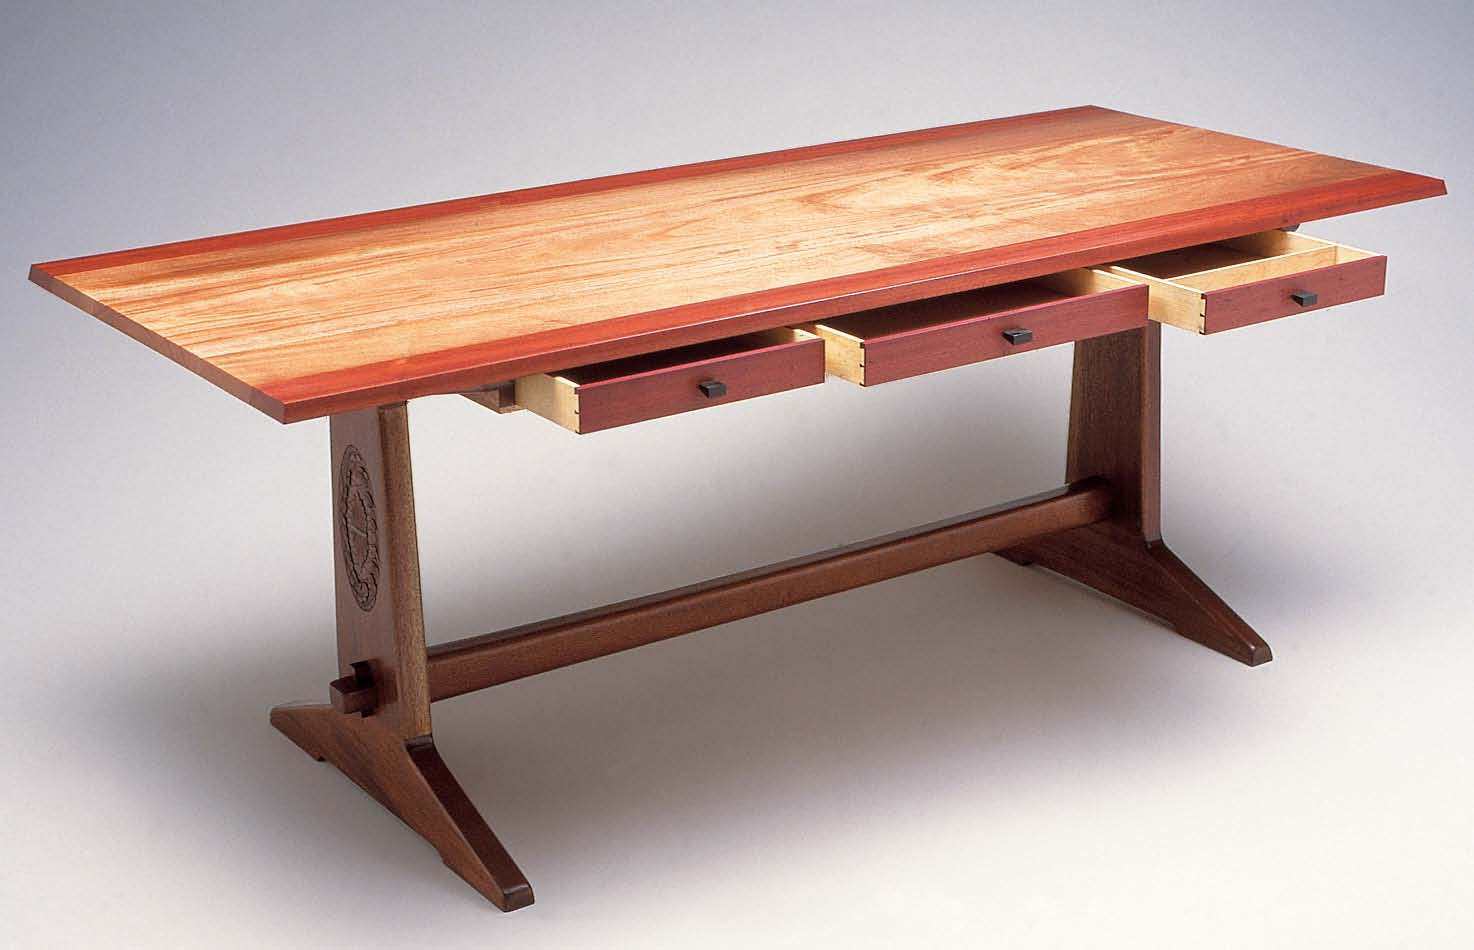 Wood table designs plans | Hawk Haven